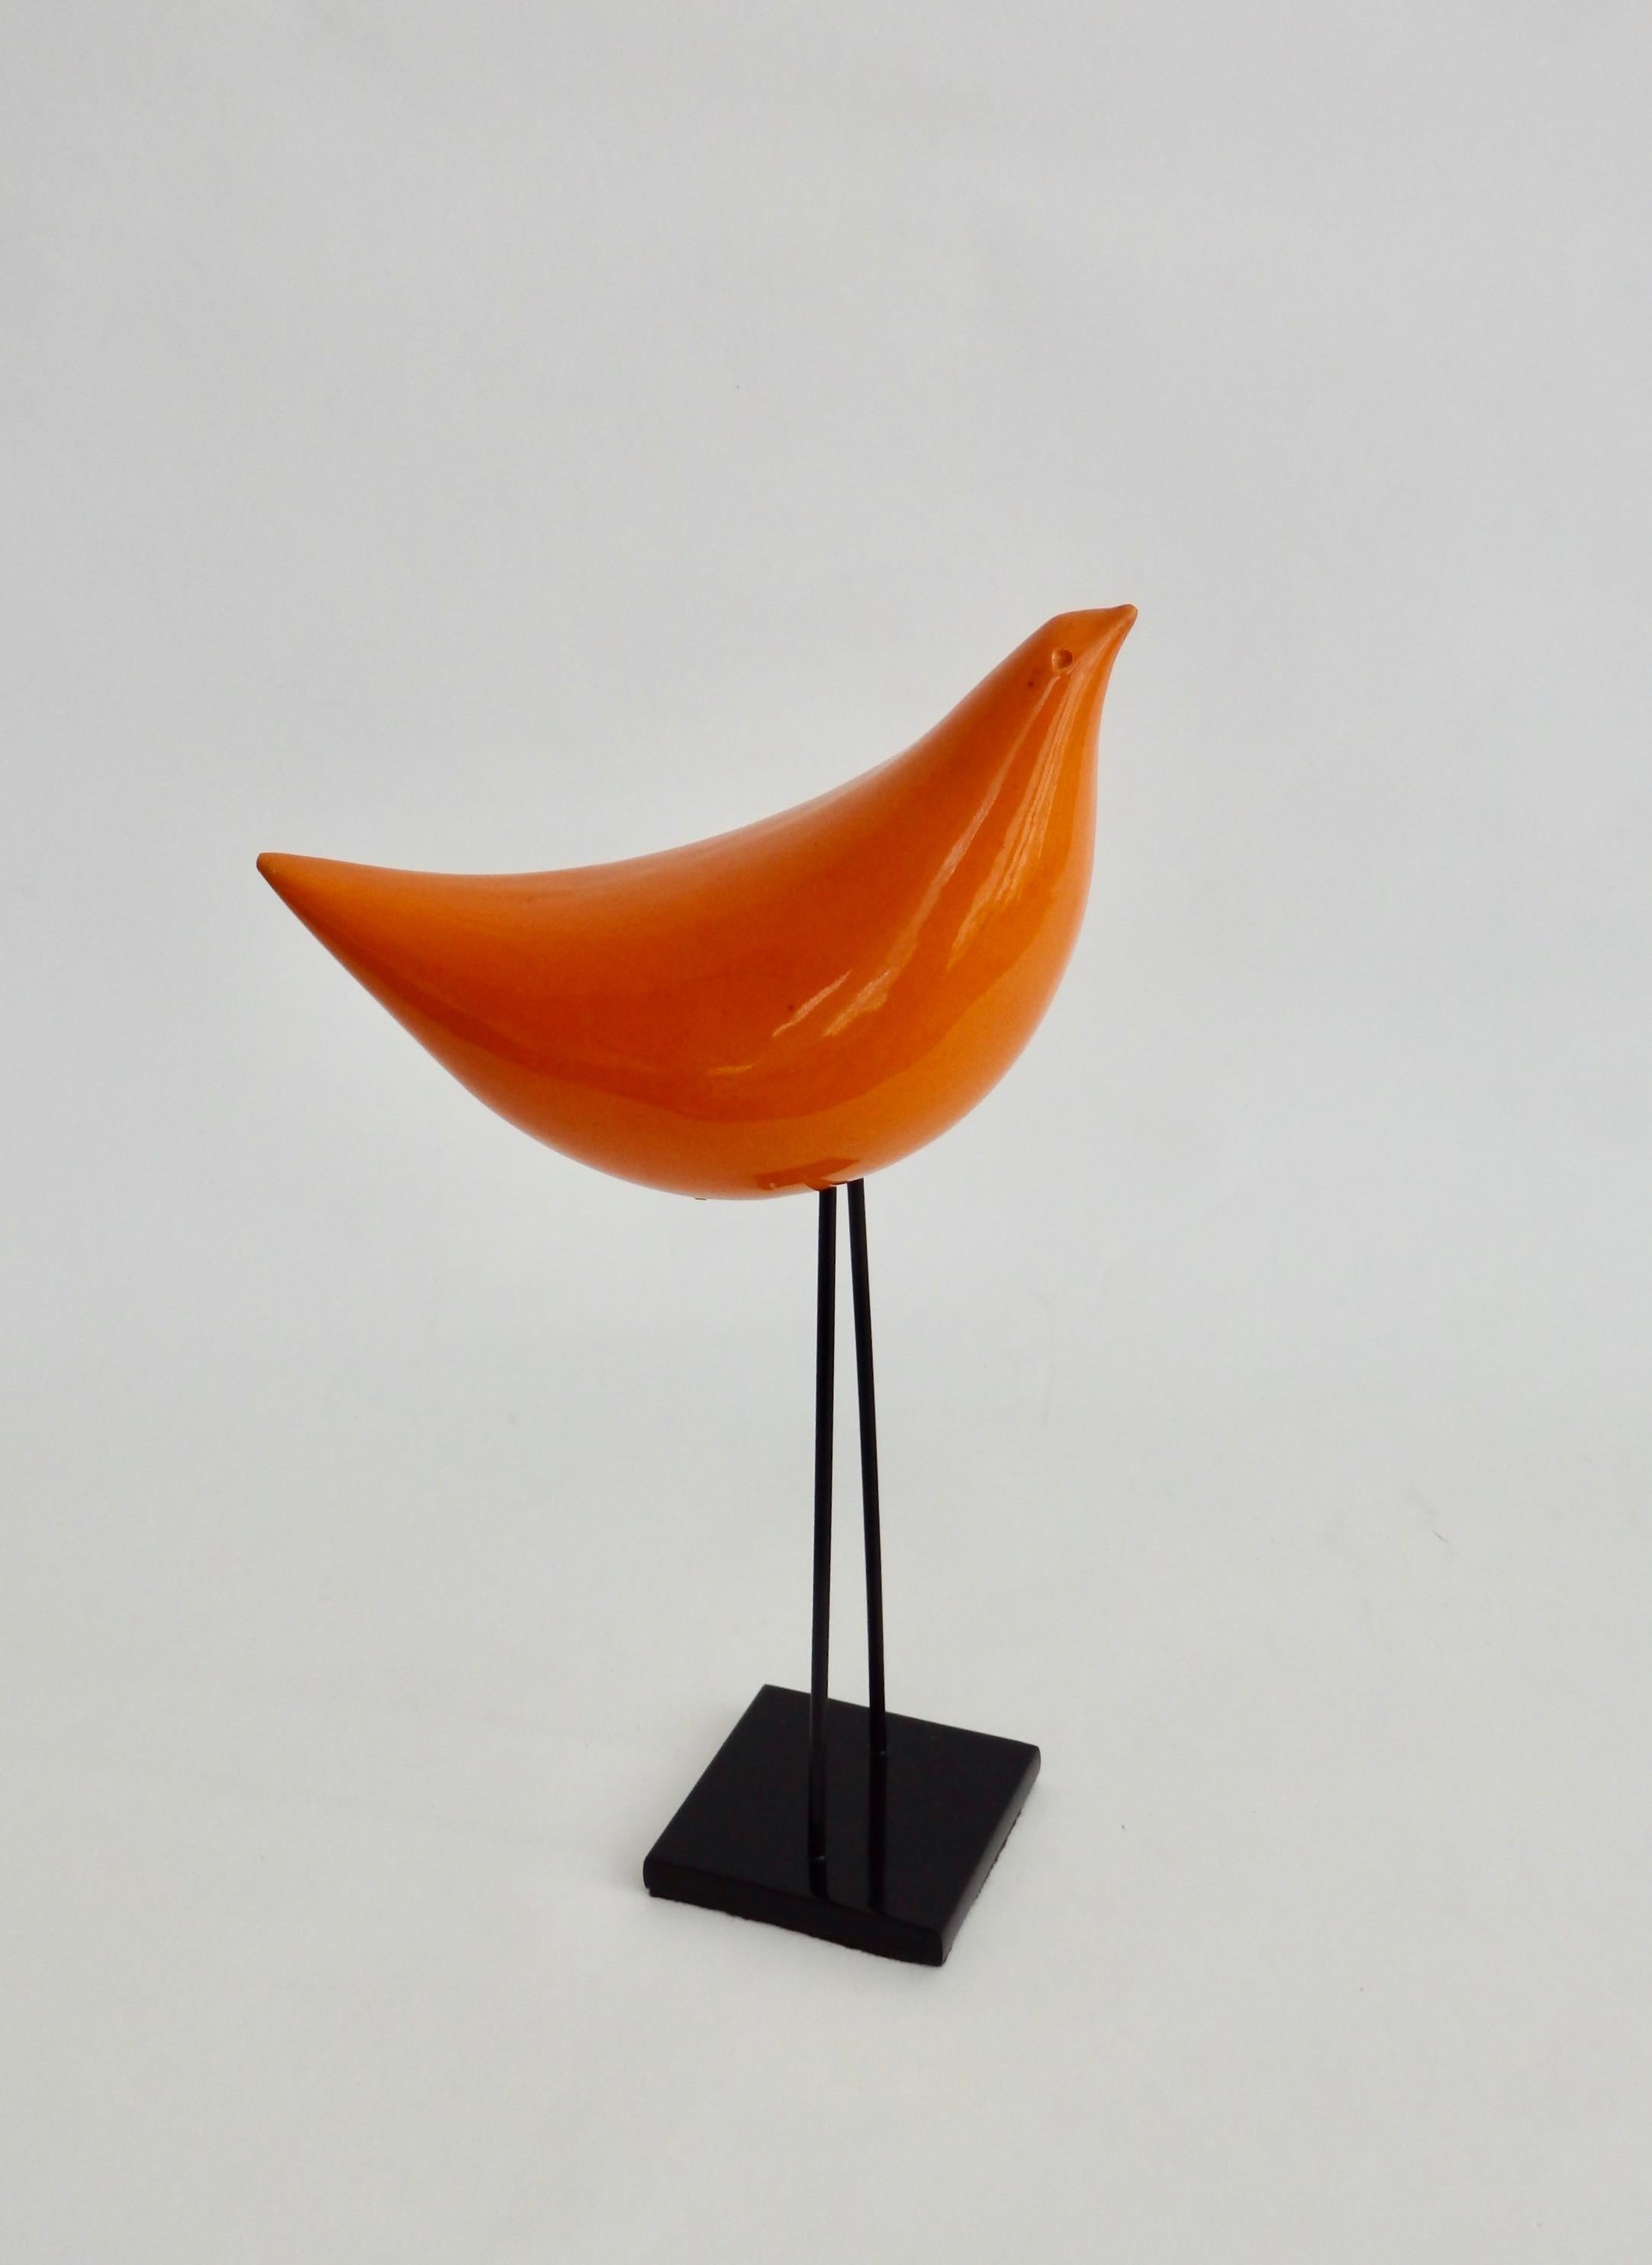 Italian Ado Londi for Bitossi Raymor Stylized Orange Bird Sculpture on Iron Base